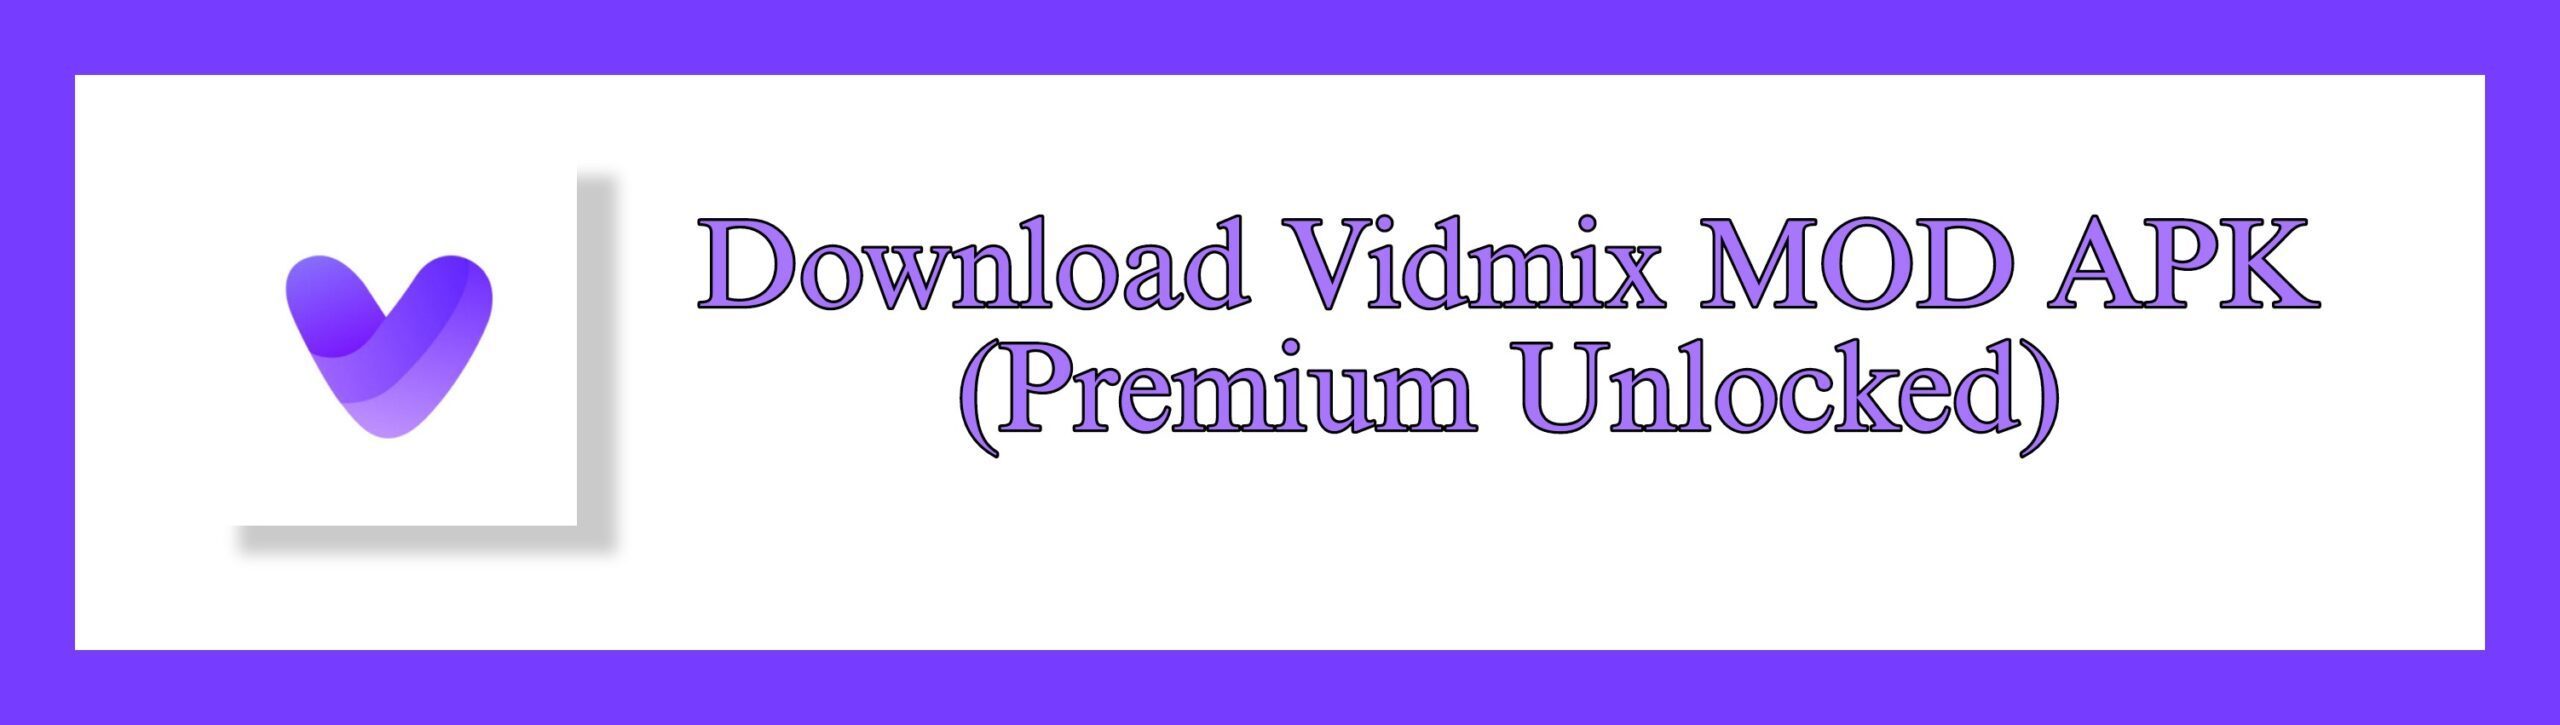 Download Vidmix mod apk